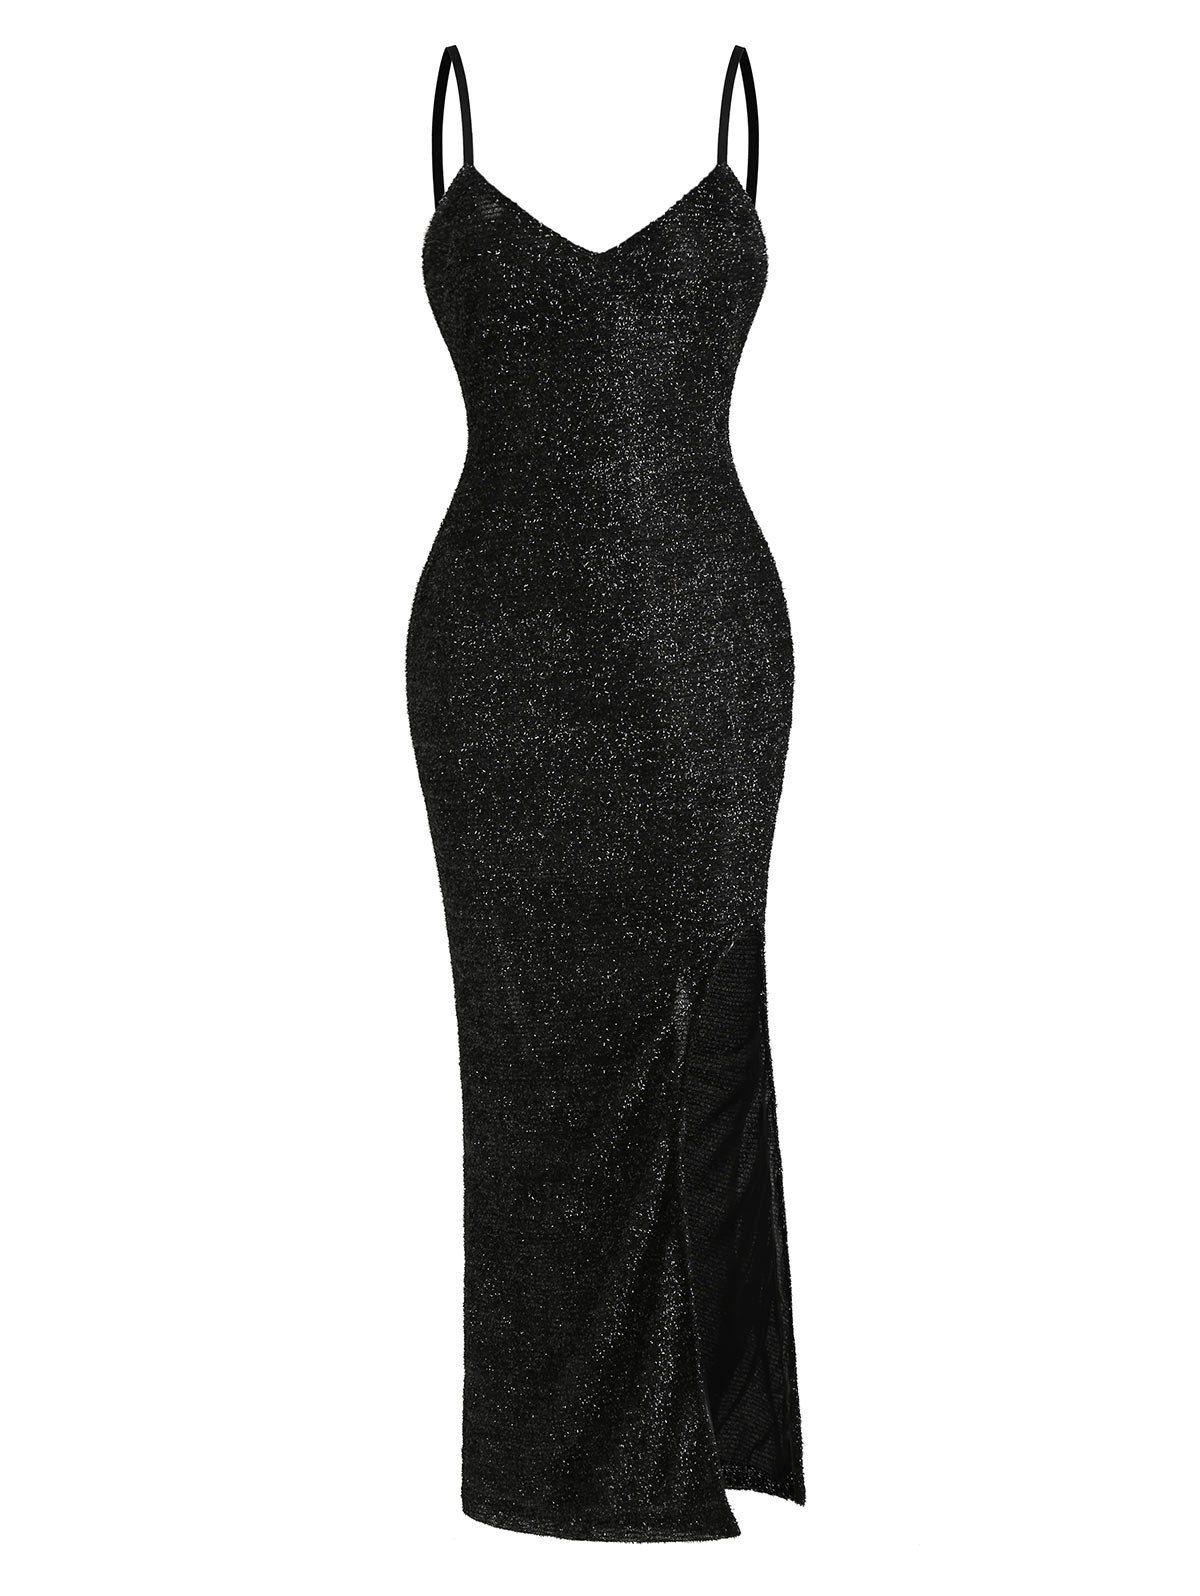 Tinsel High Split Maxi Party Dress - BLACK M